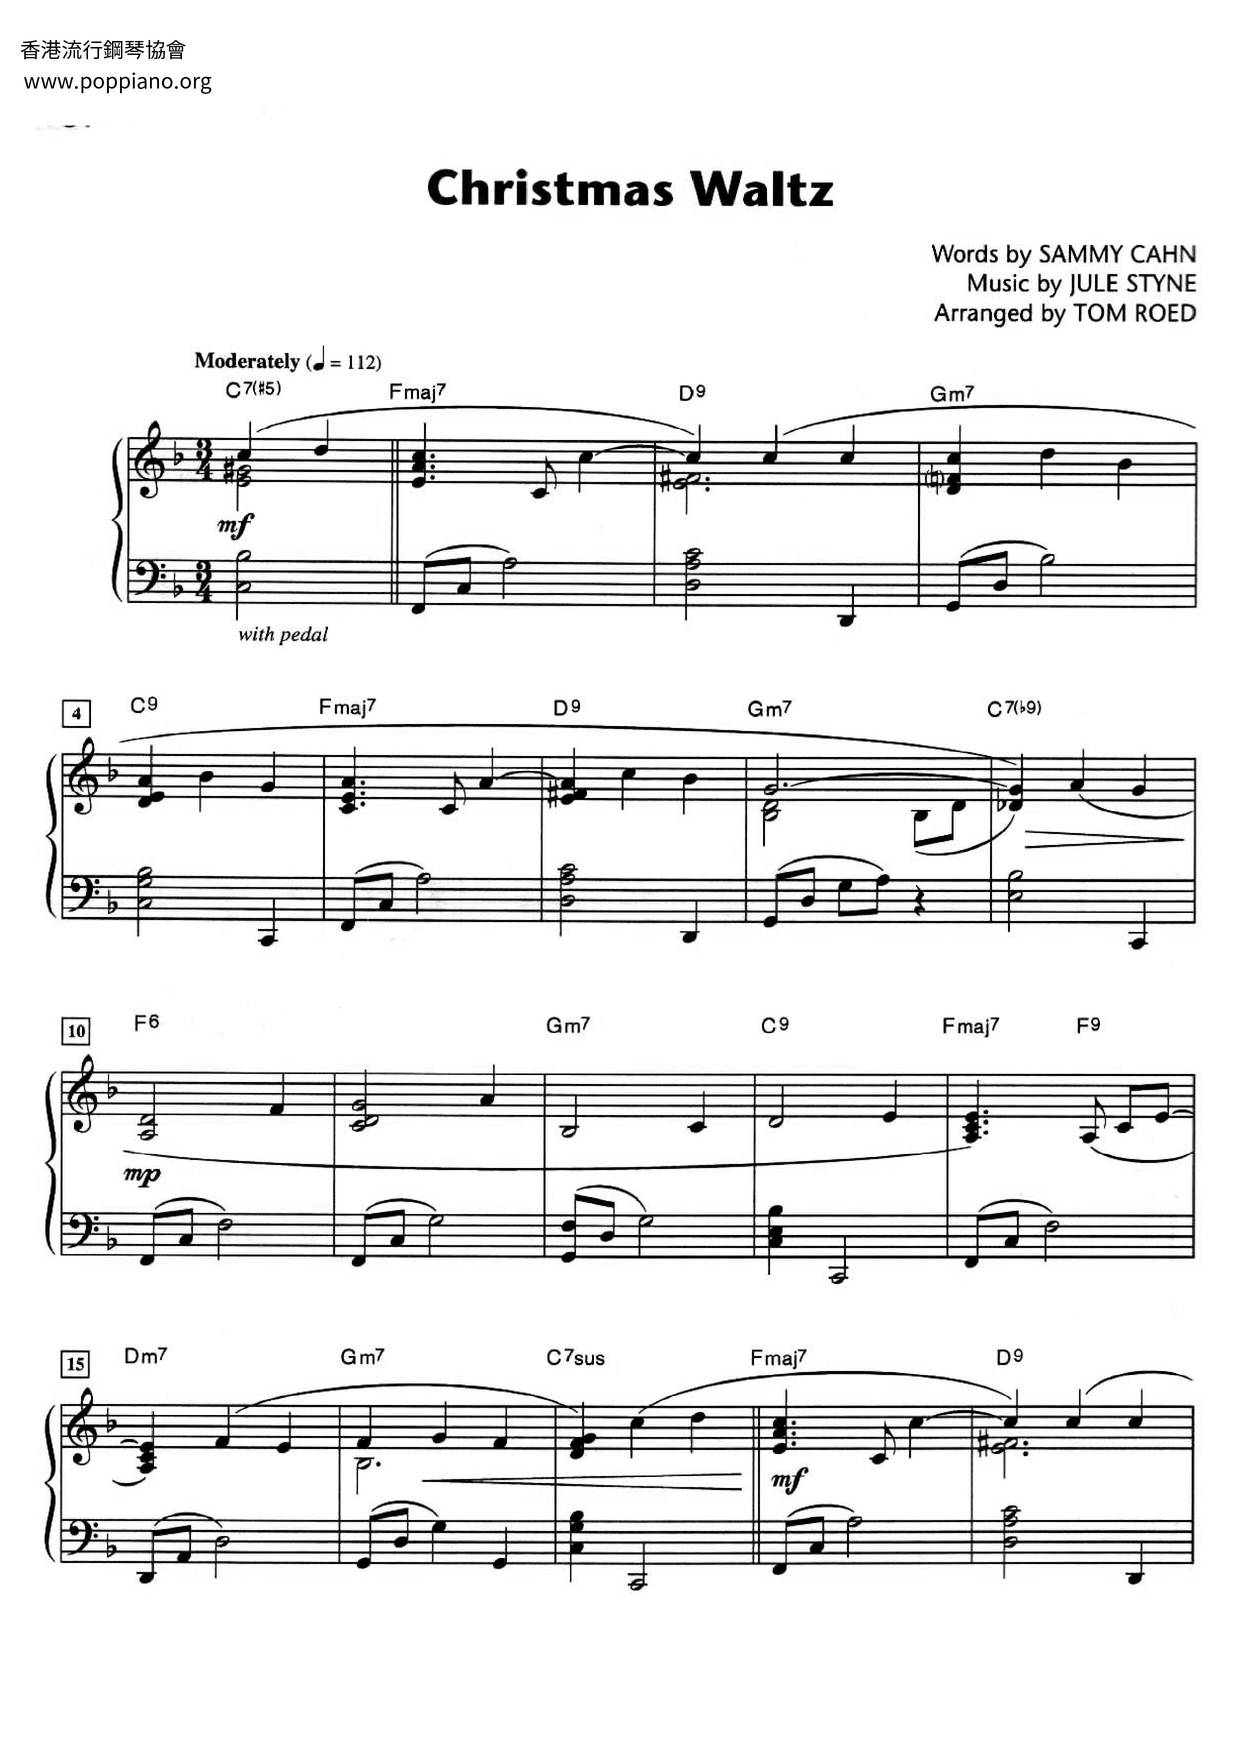 Christmas Waltz Score